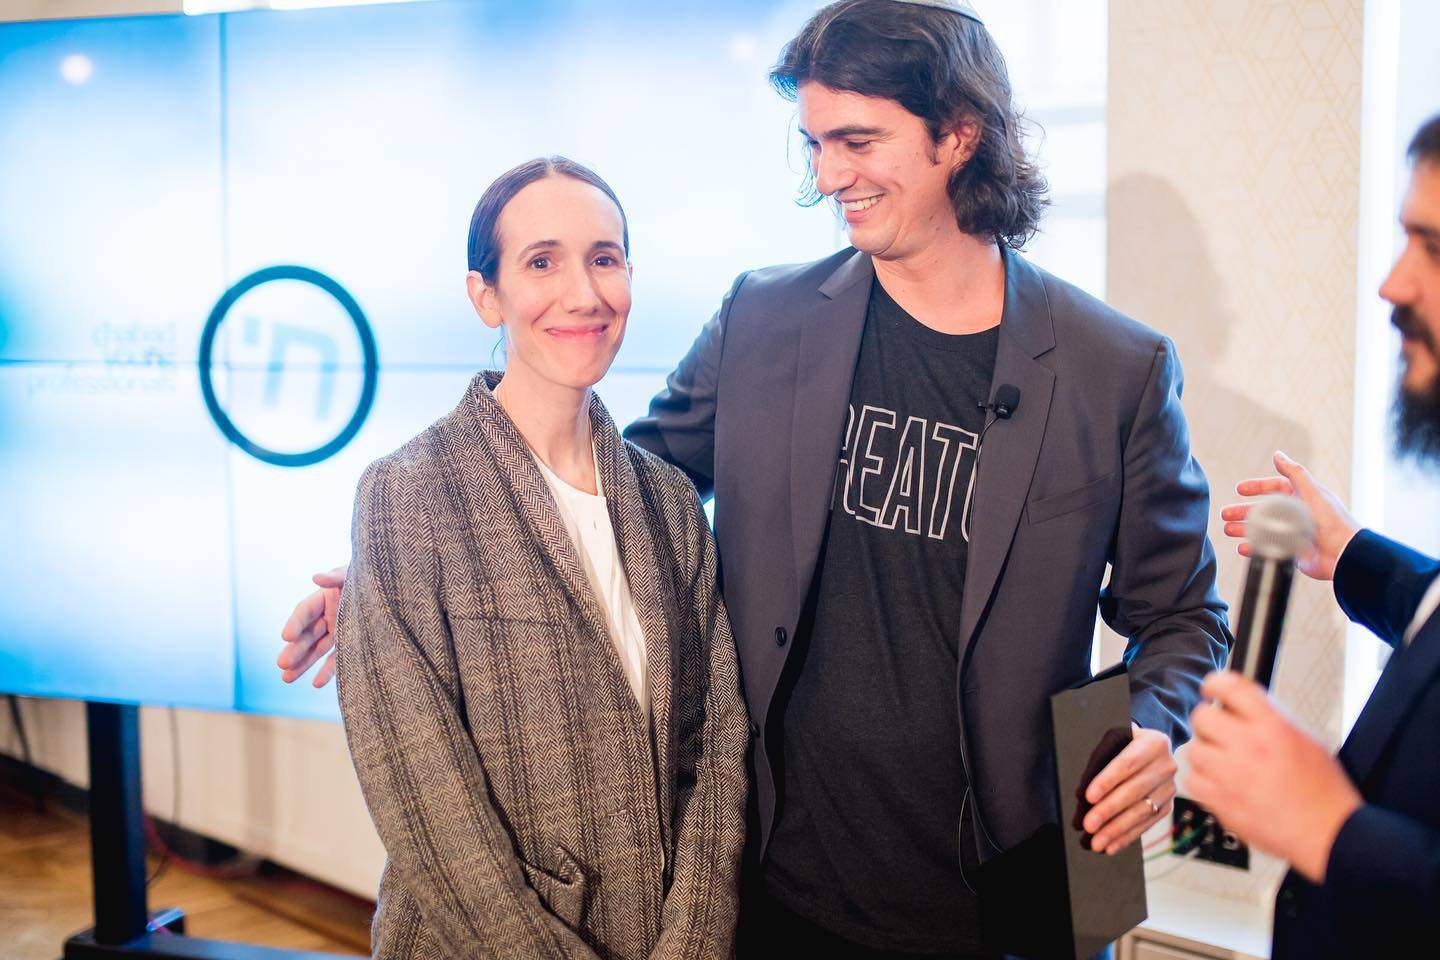 WeWork co-founder Adam Neumann and his wife Rebekah Neumann. Photo: @chabadyoung/Instagram